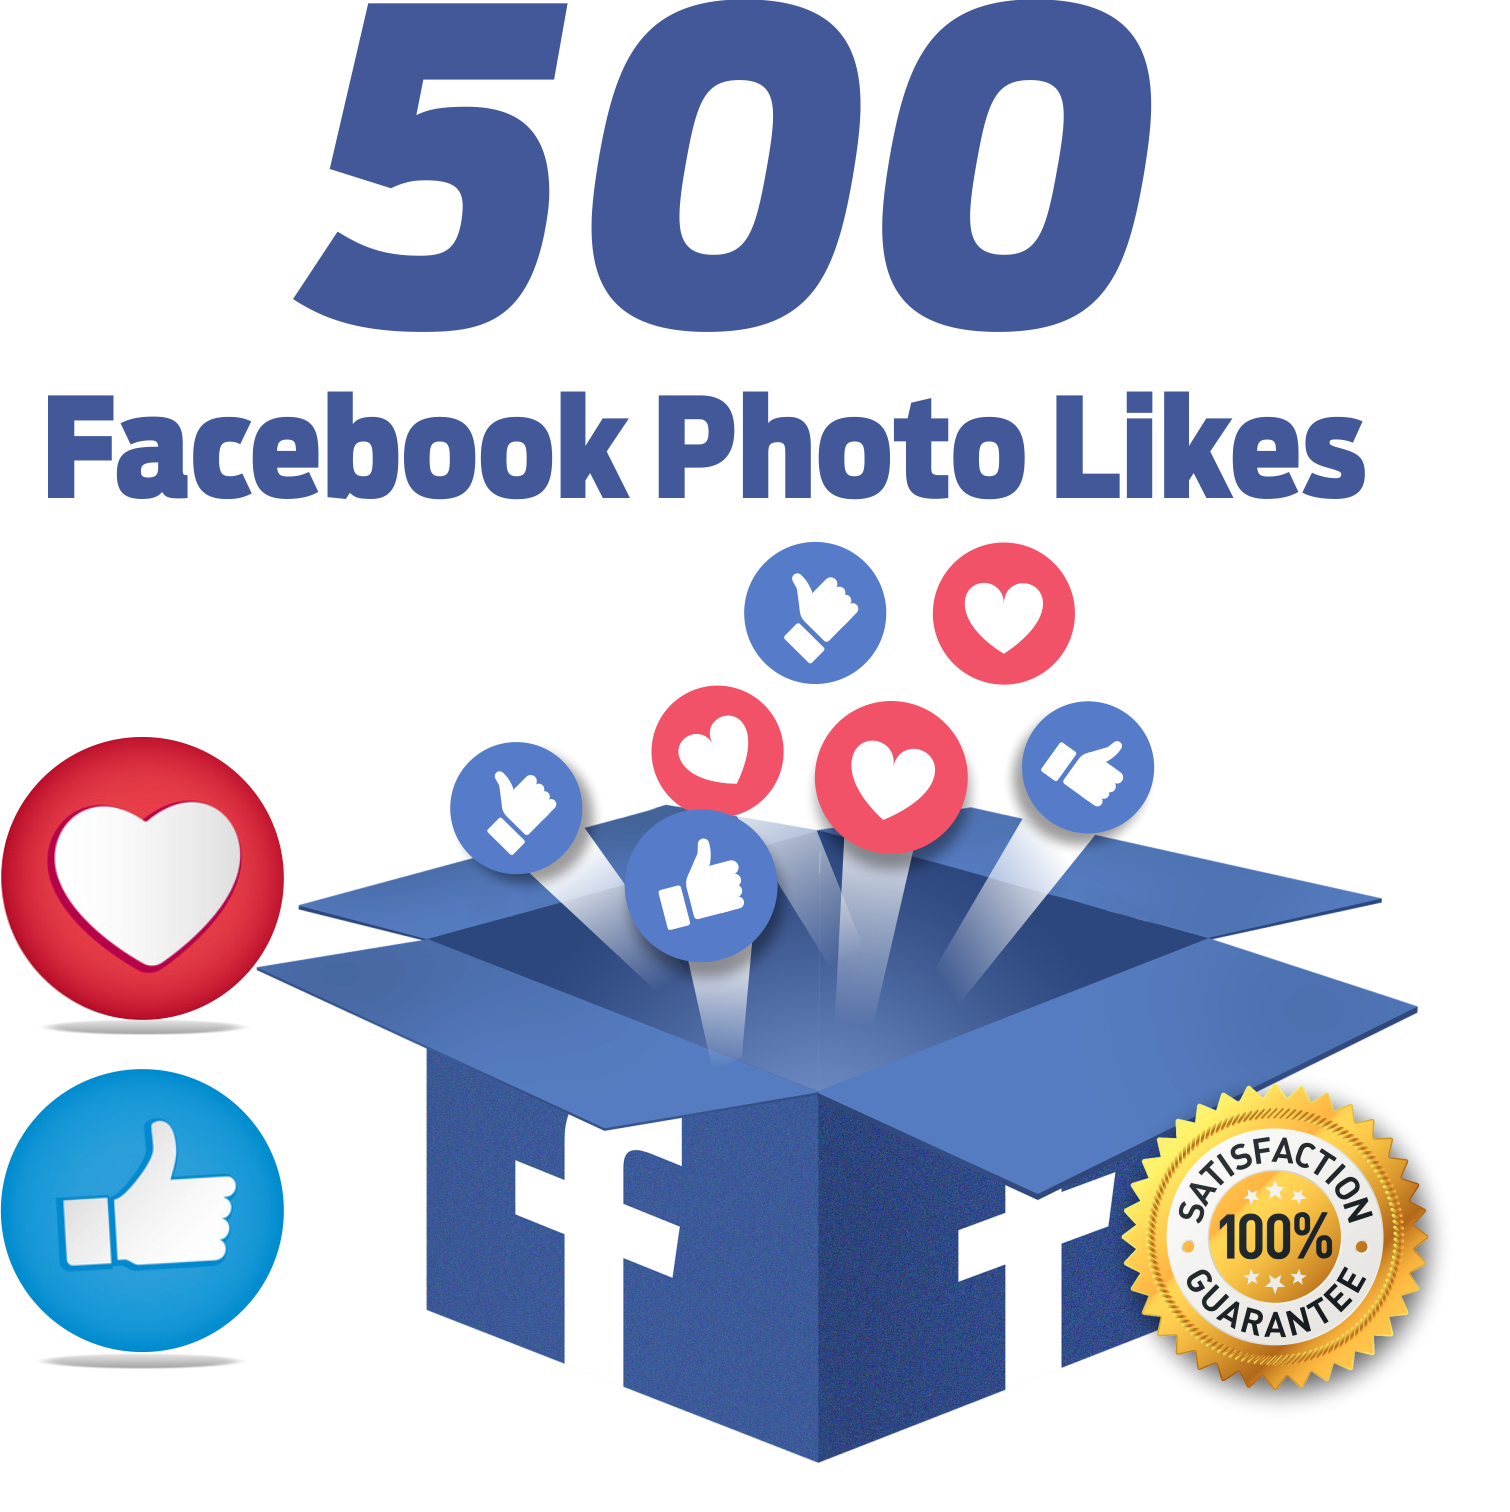 500 facebook photo likes